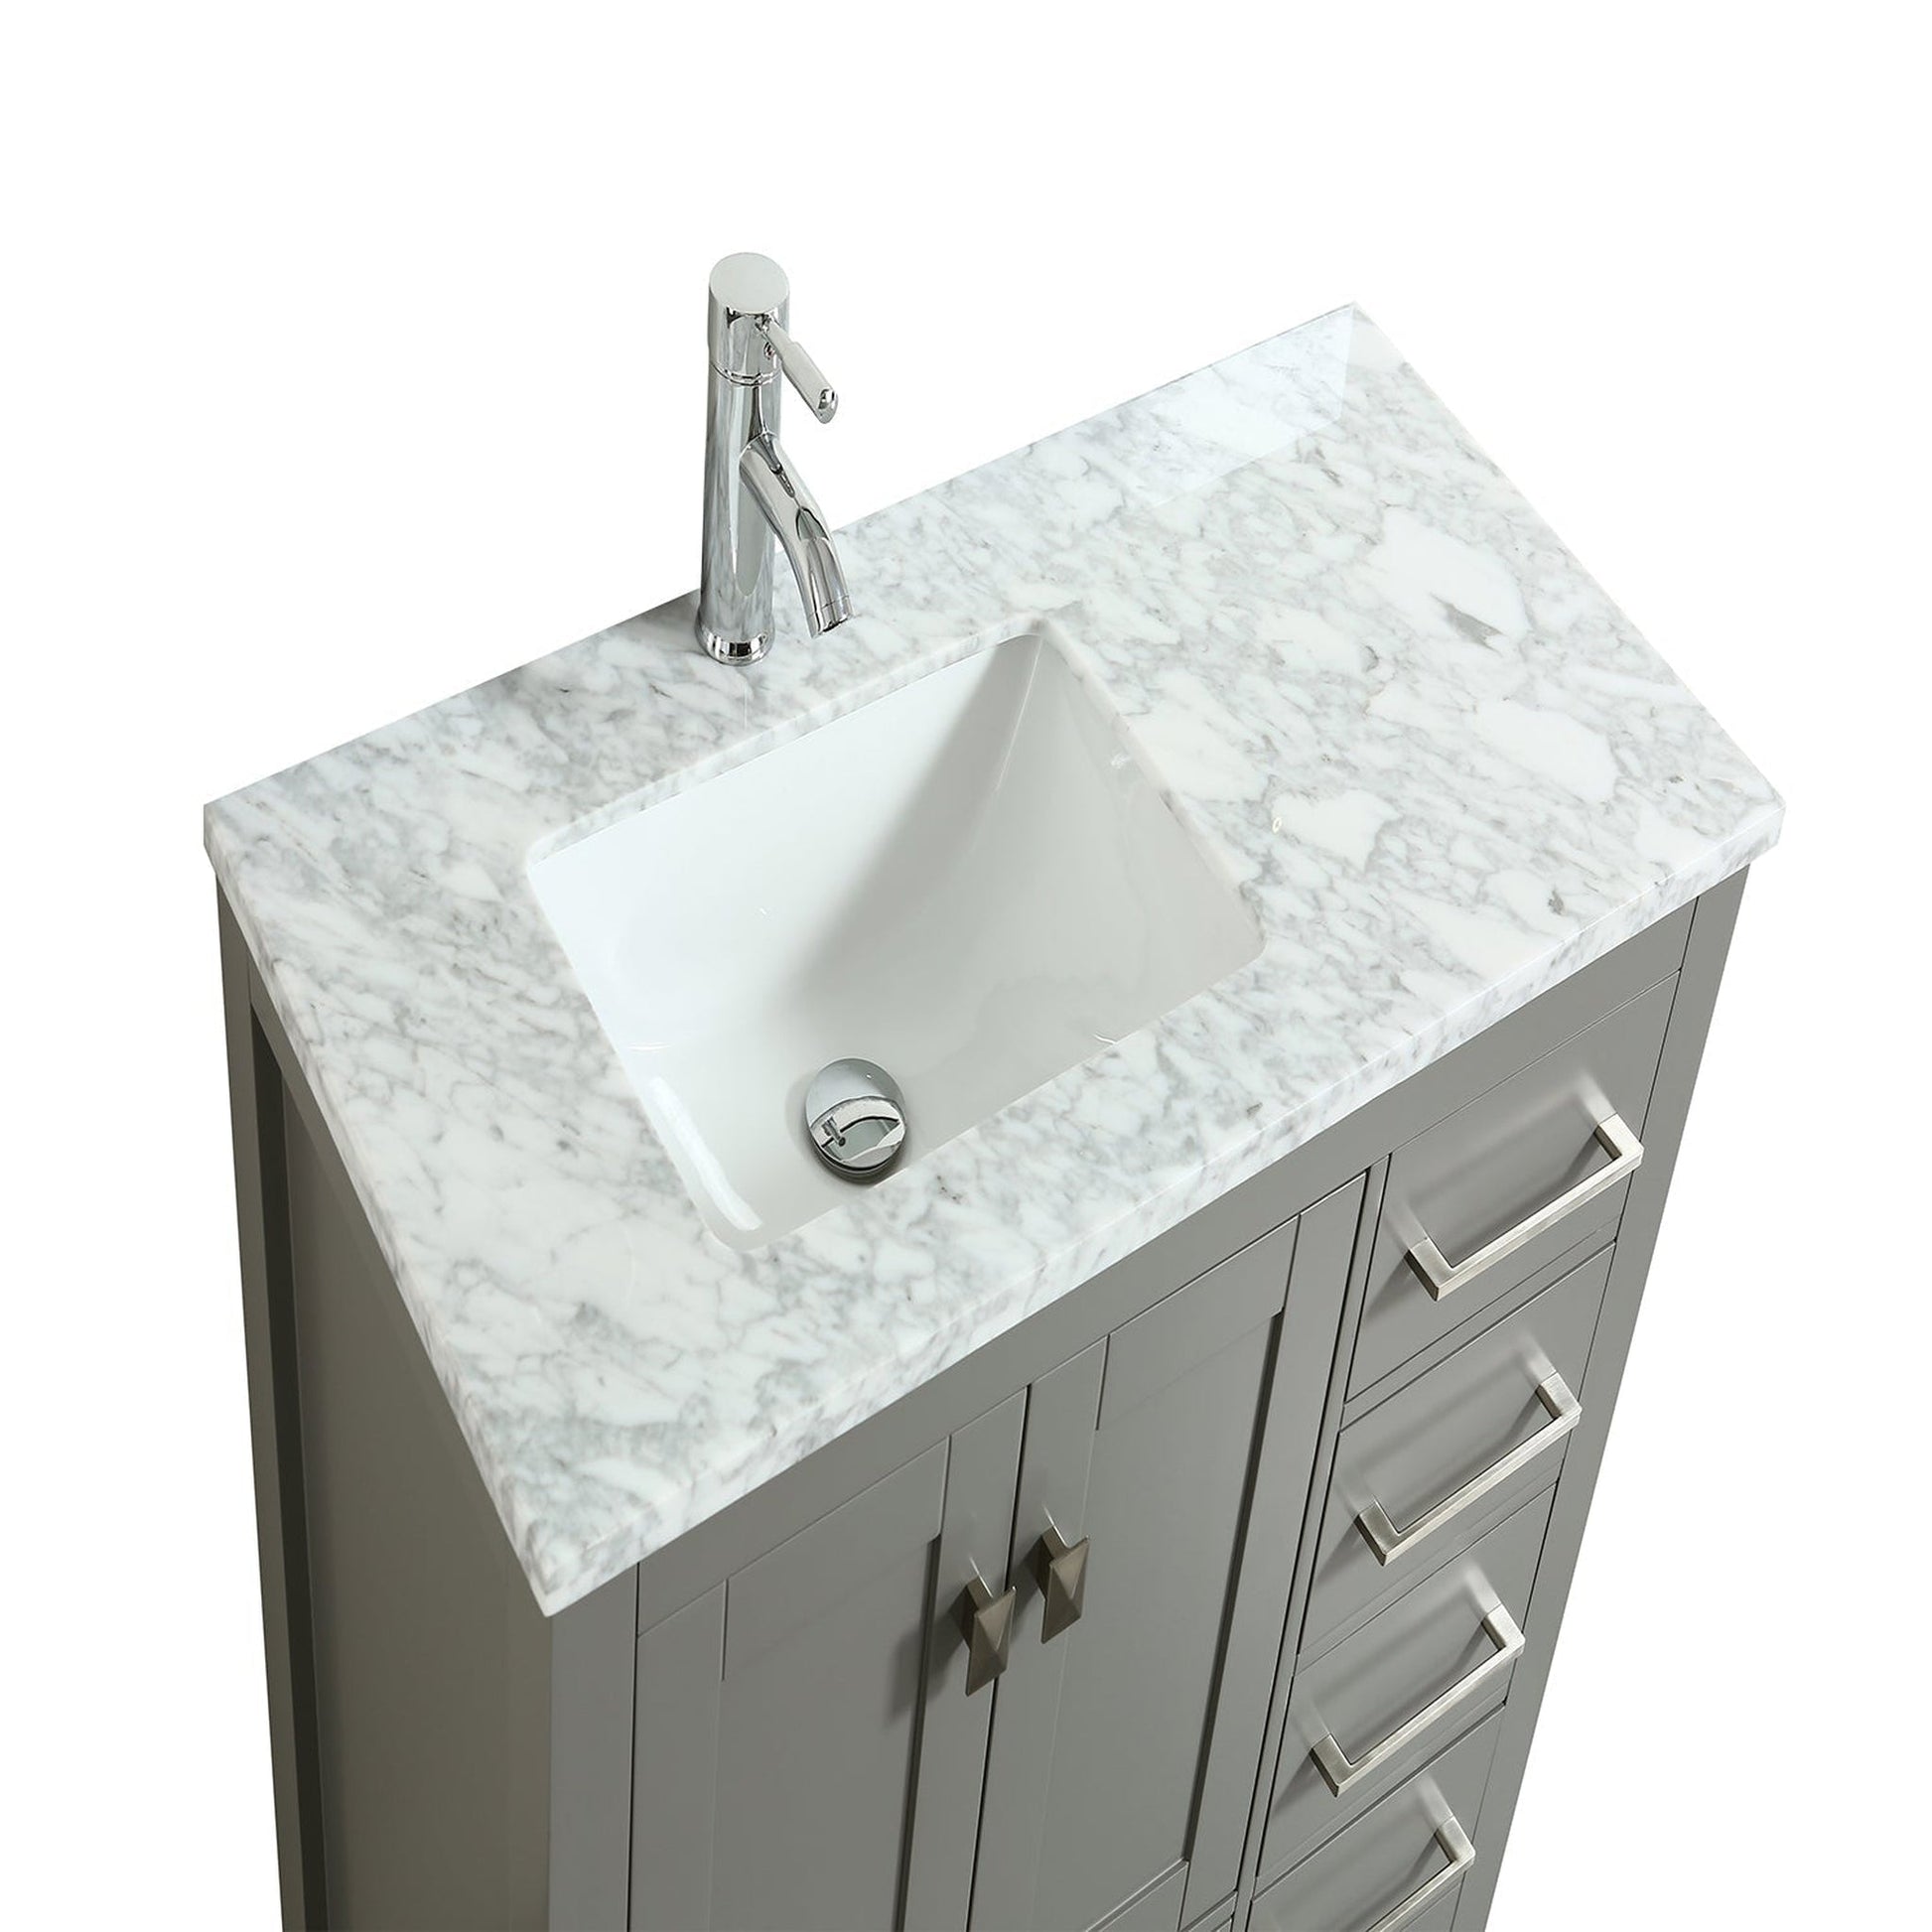 Eviva London 38" x 34" Gray Freestanding Bathroom Vanity With Carrara Marble Countertop and Single Undermount Sink